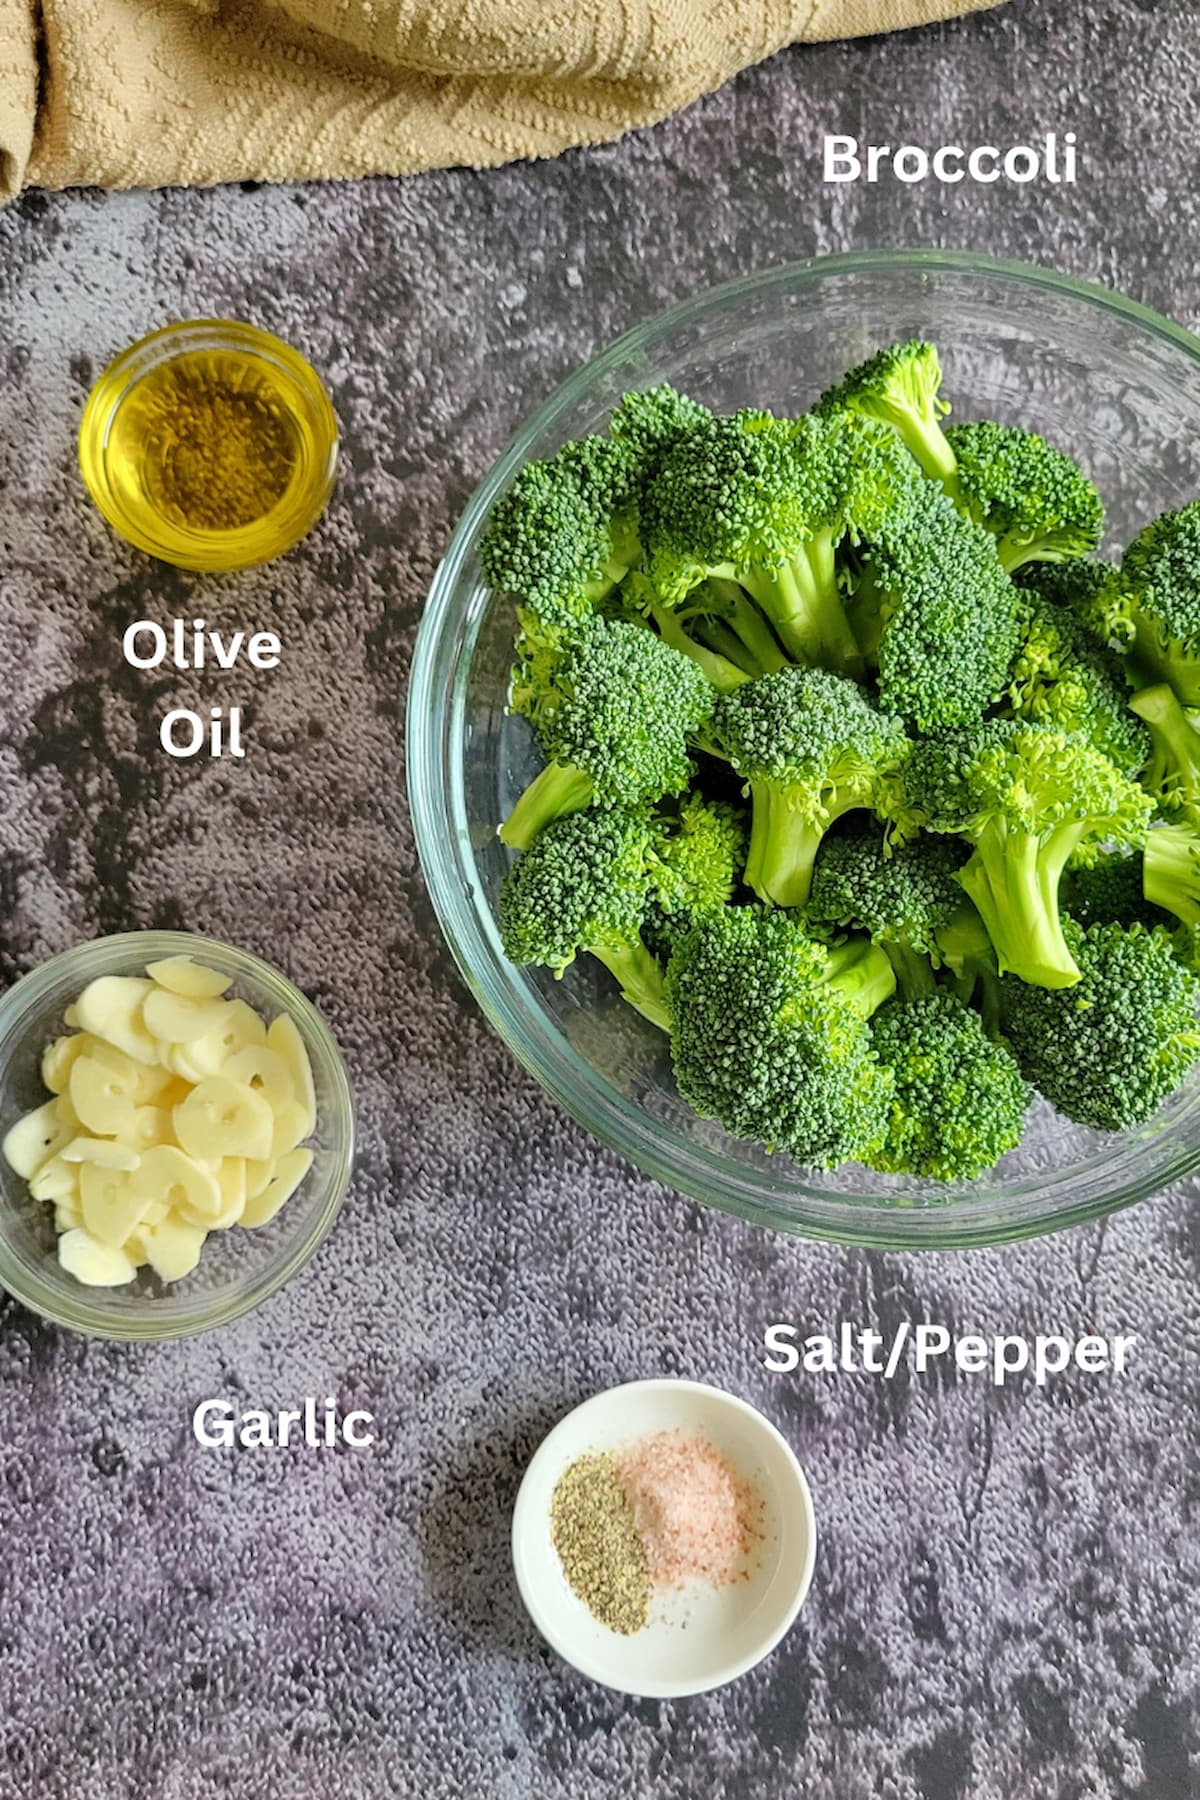 ingredients for recipe for garlic broccoli - broccoli, garlic, salt/pepper, olive oil